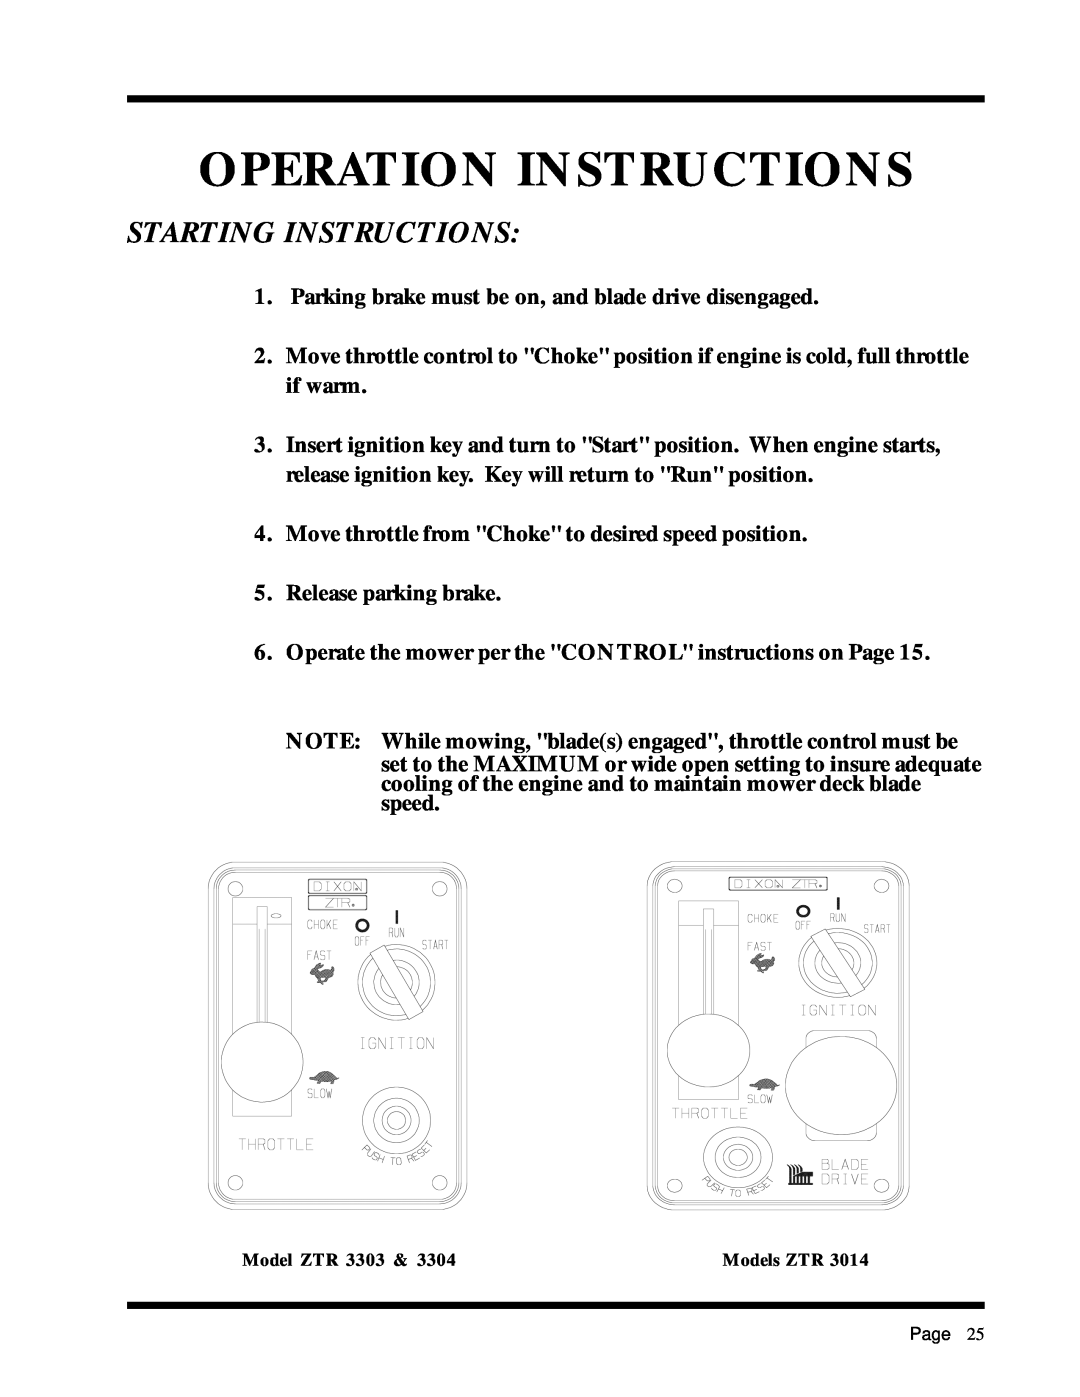 Dixon ZTR 3304, ZTR 3303, 1855-0599, 6520-1099 manual Starting Instructions, Operation Instructions 